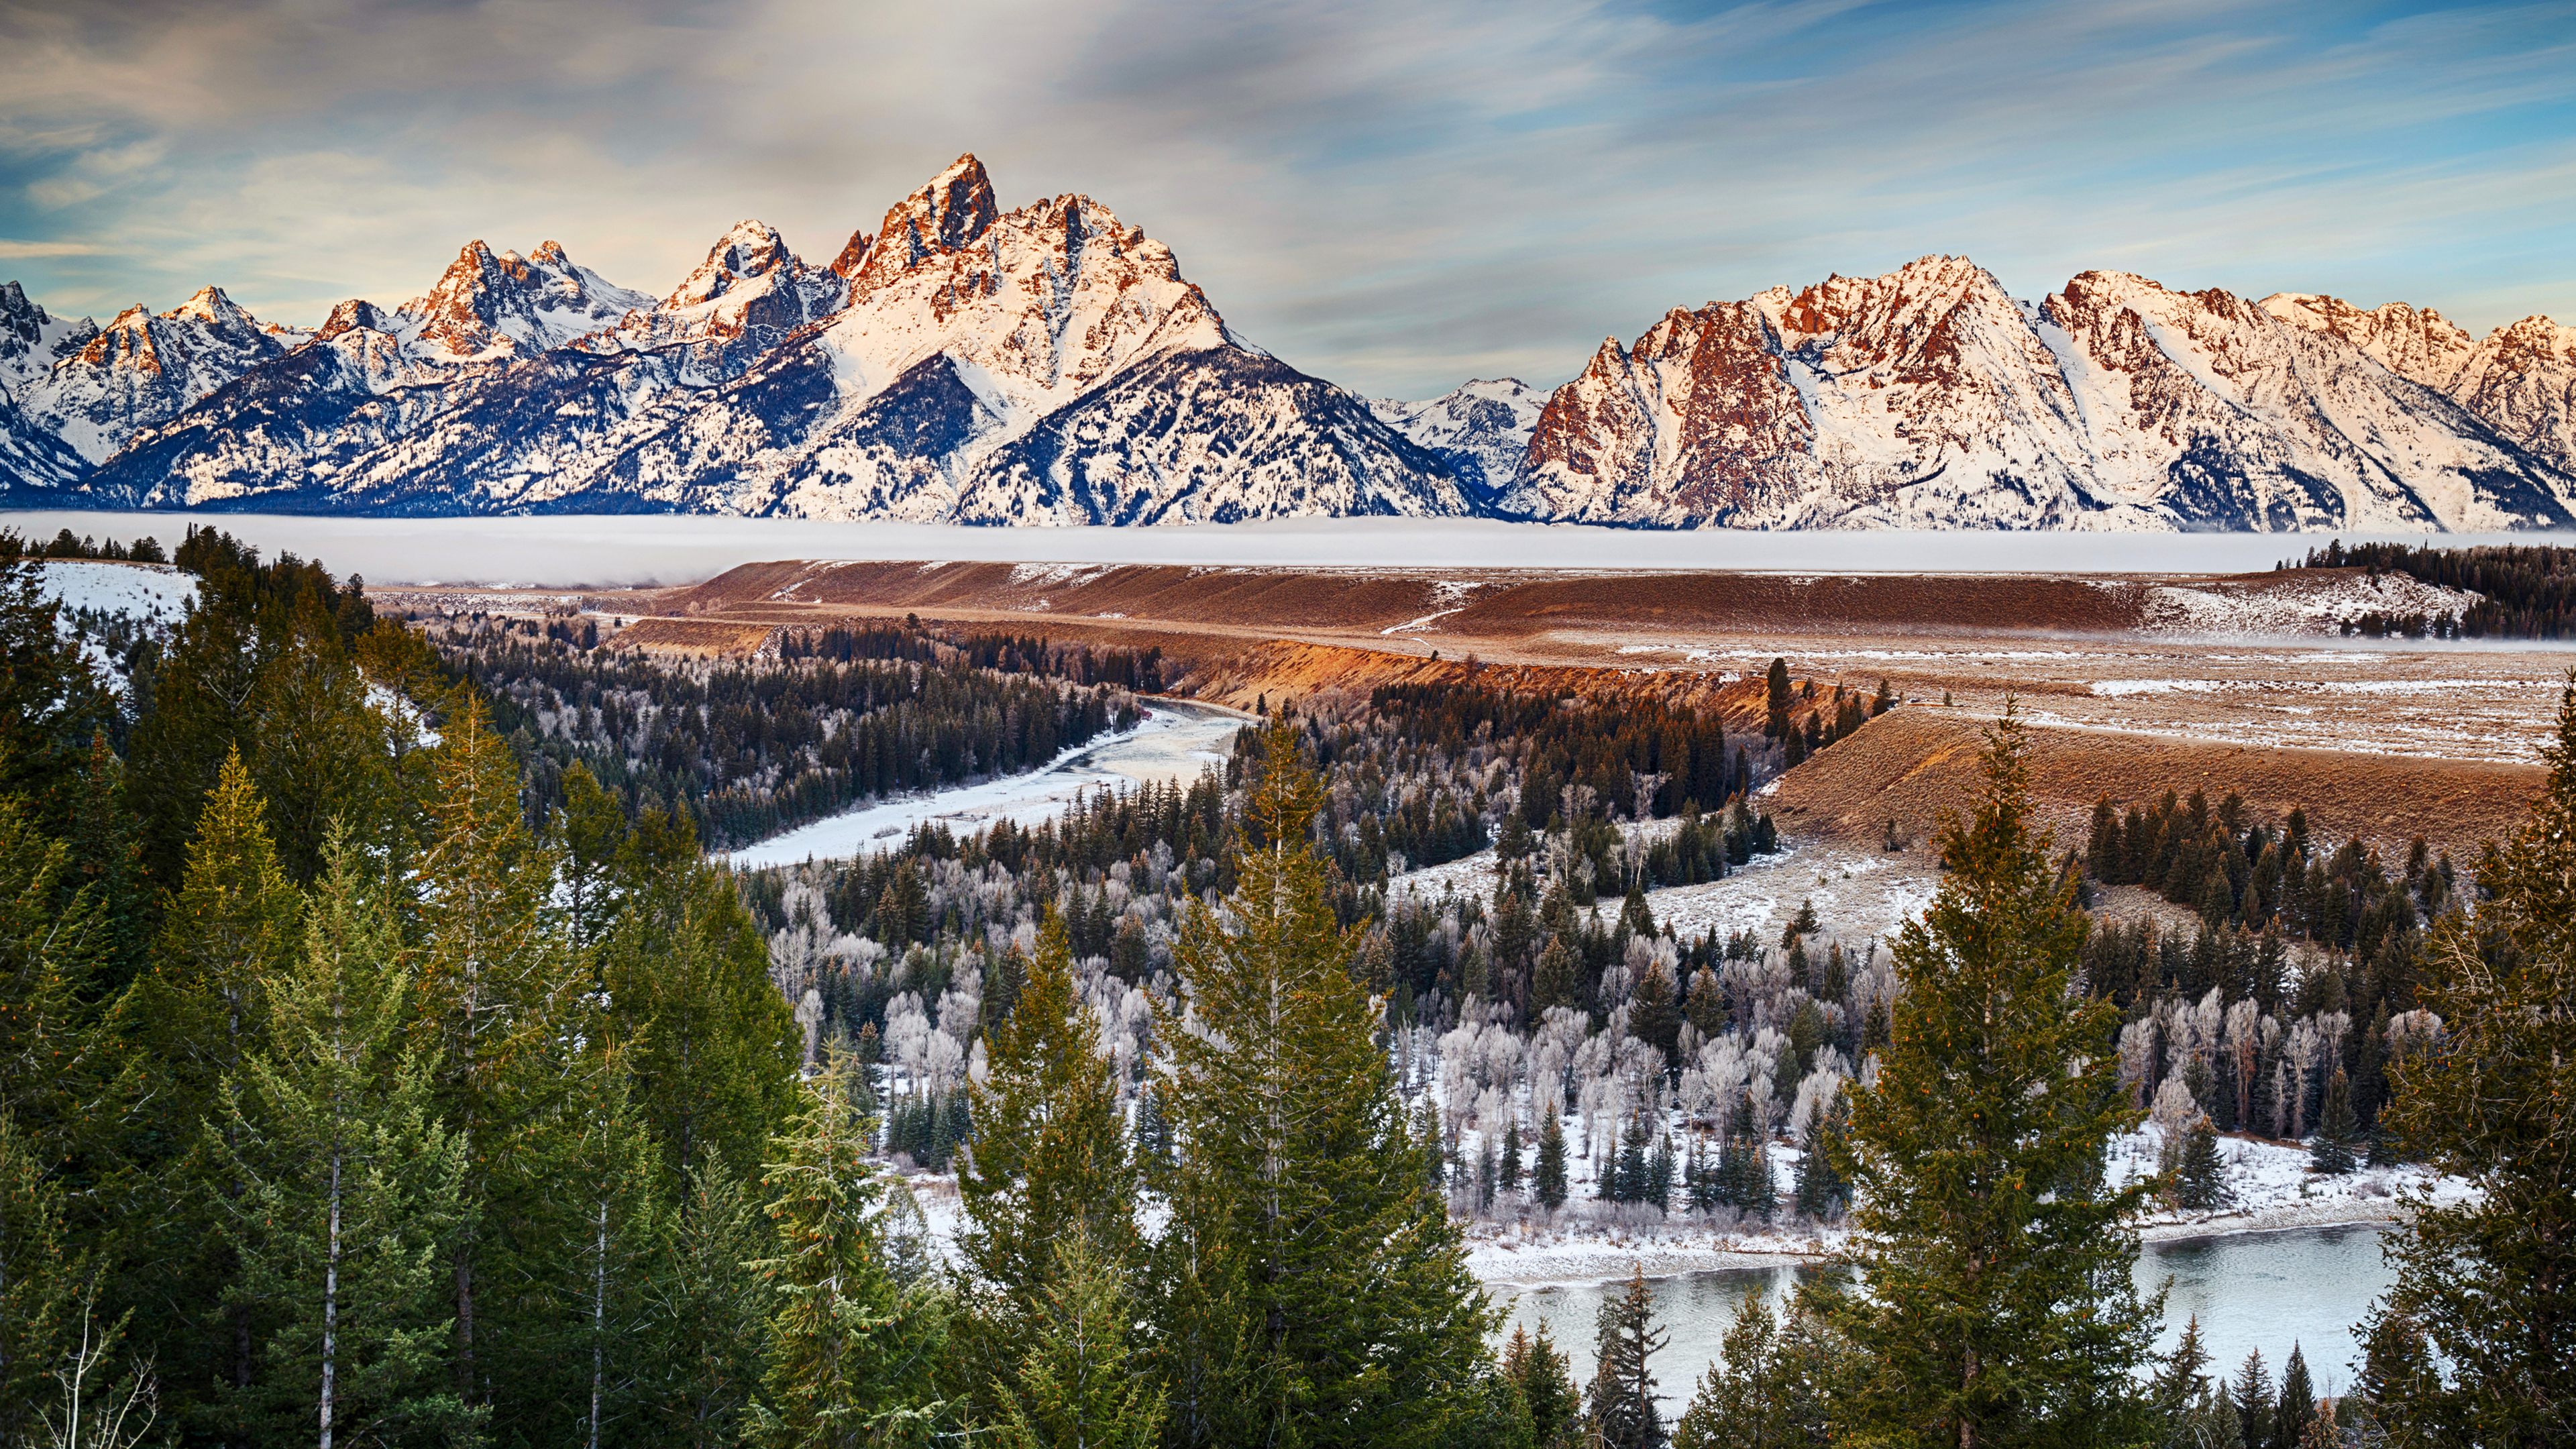 661486 descargar imagen paisaje, nieve, tierra/naturaleza, montaña: fondos de pantalla y protectores de pantalla gratis